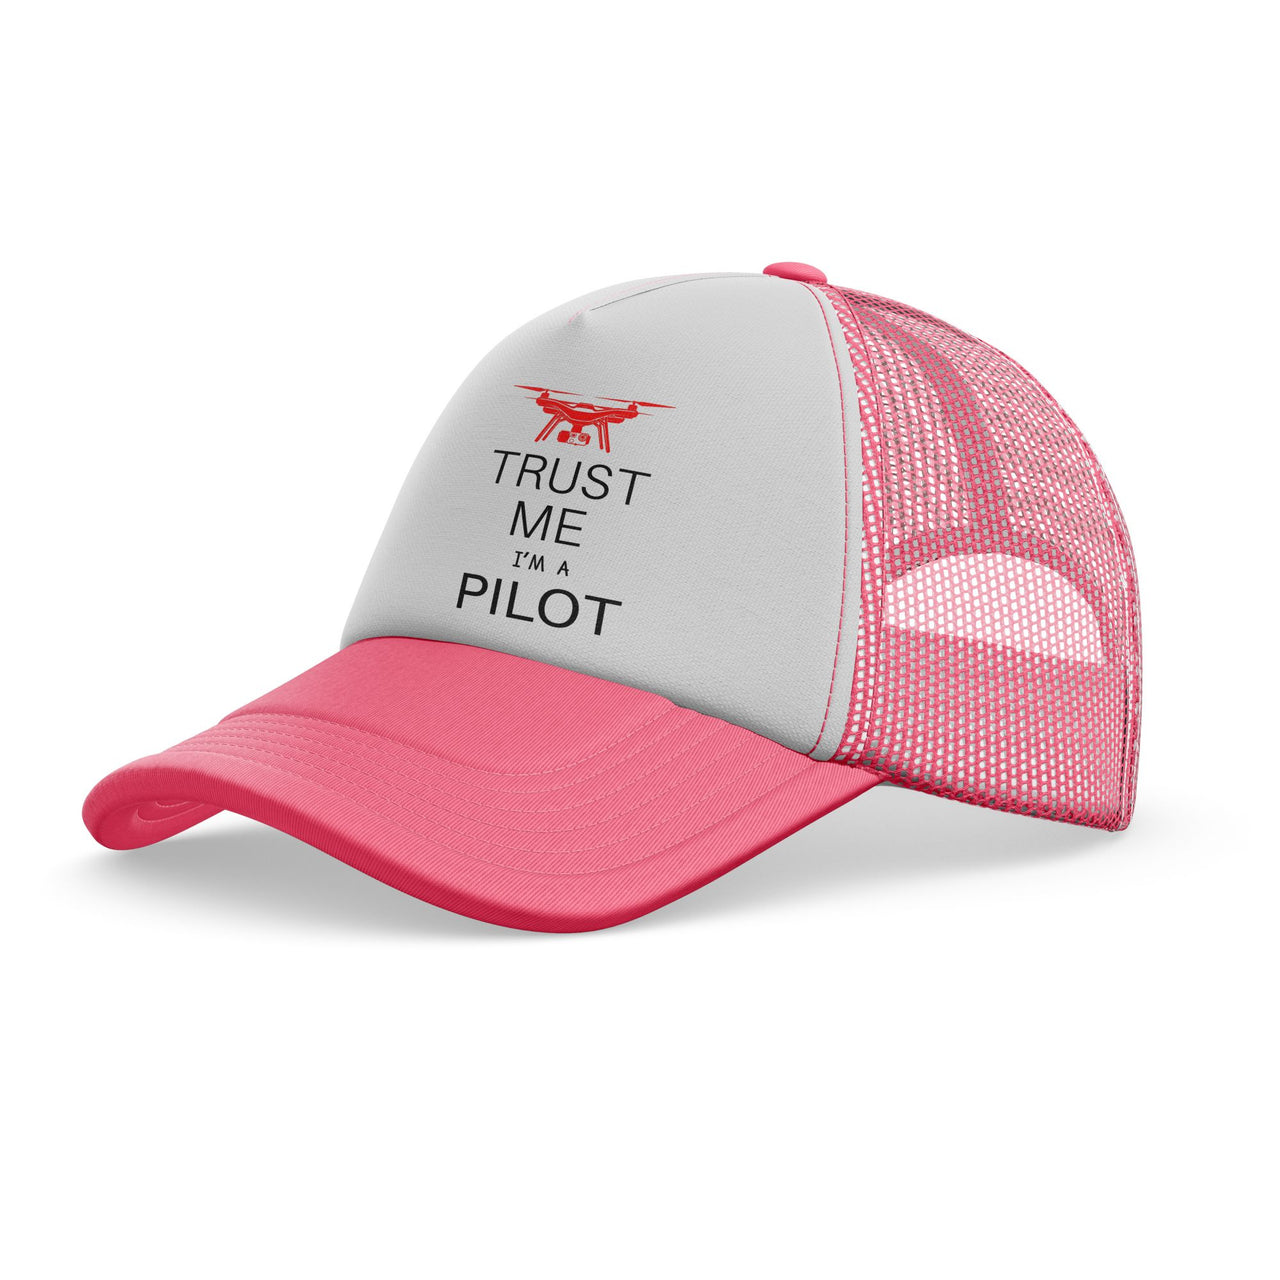 Trust Me I'm a Pilot (Drone) Designed Trucker Caps & Hats